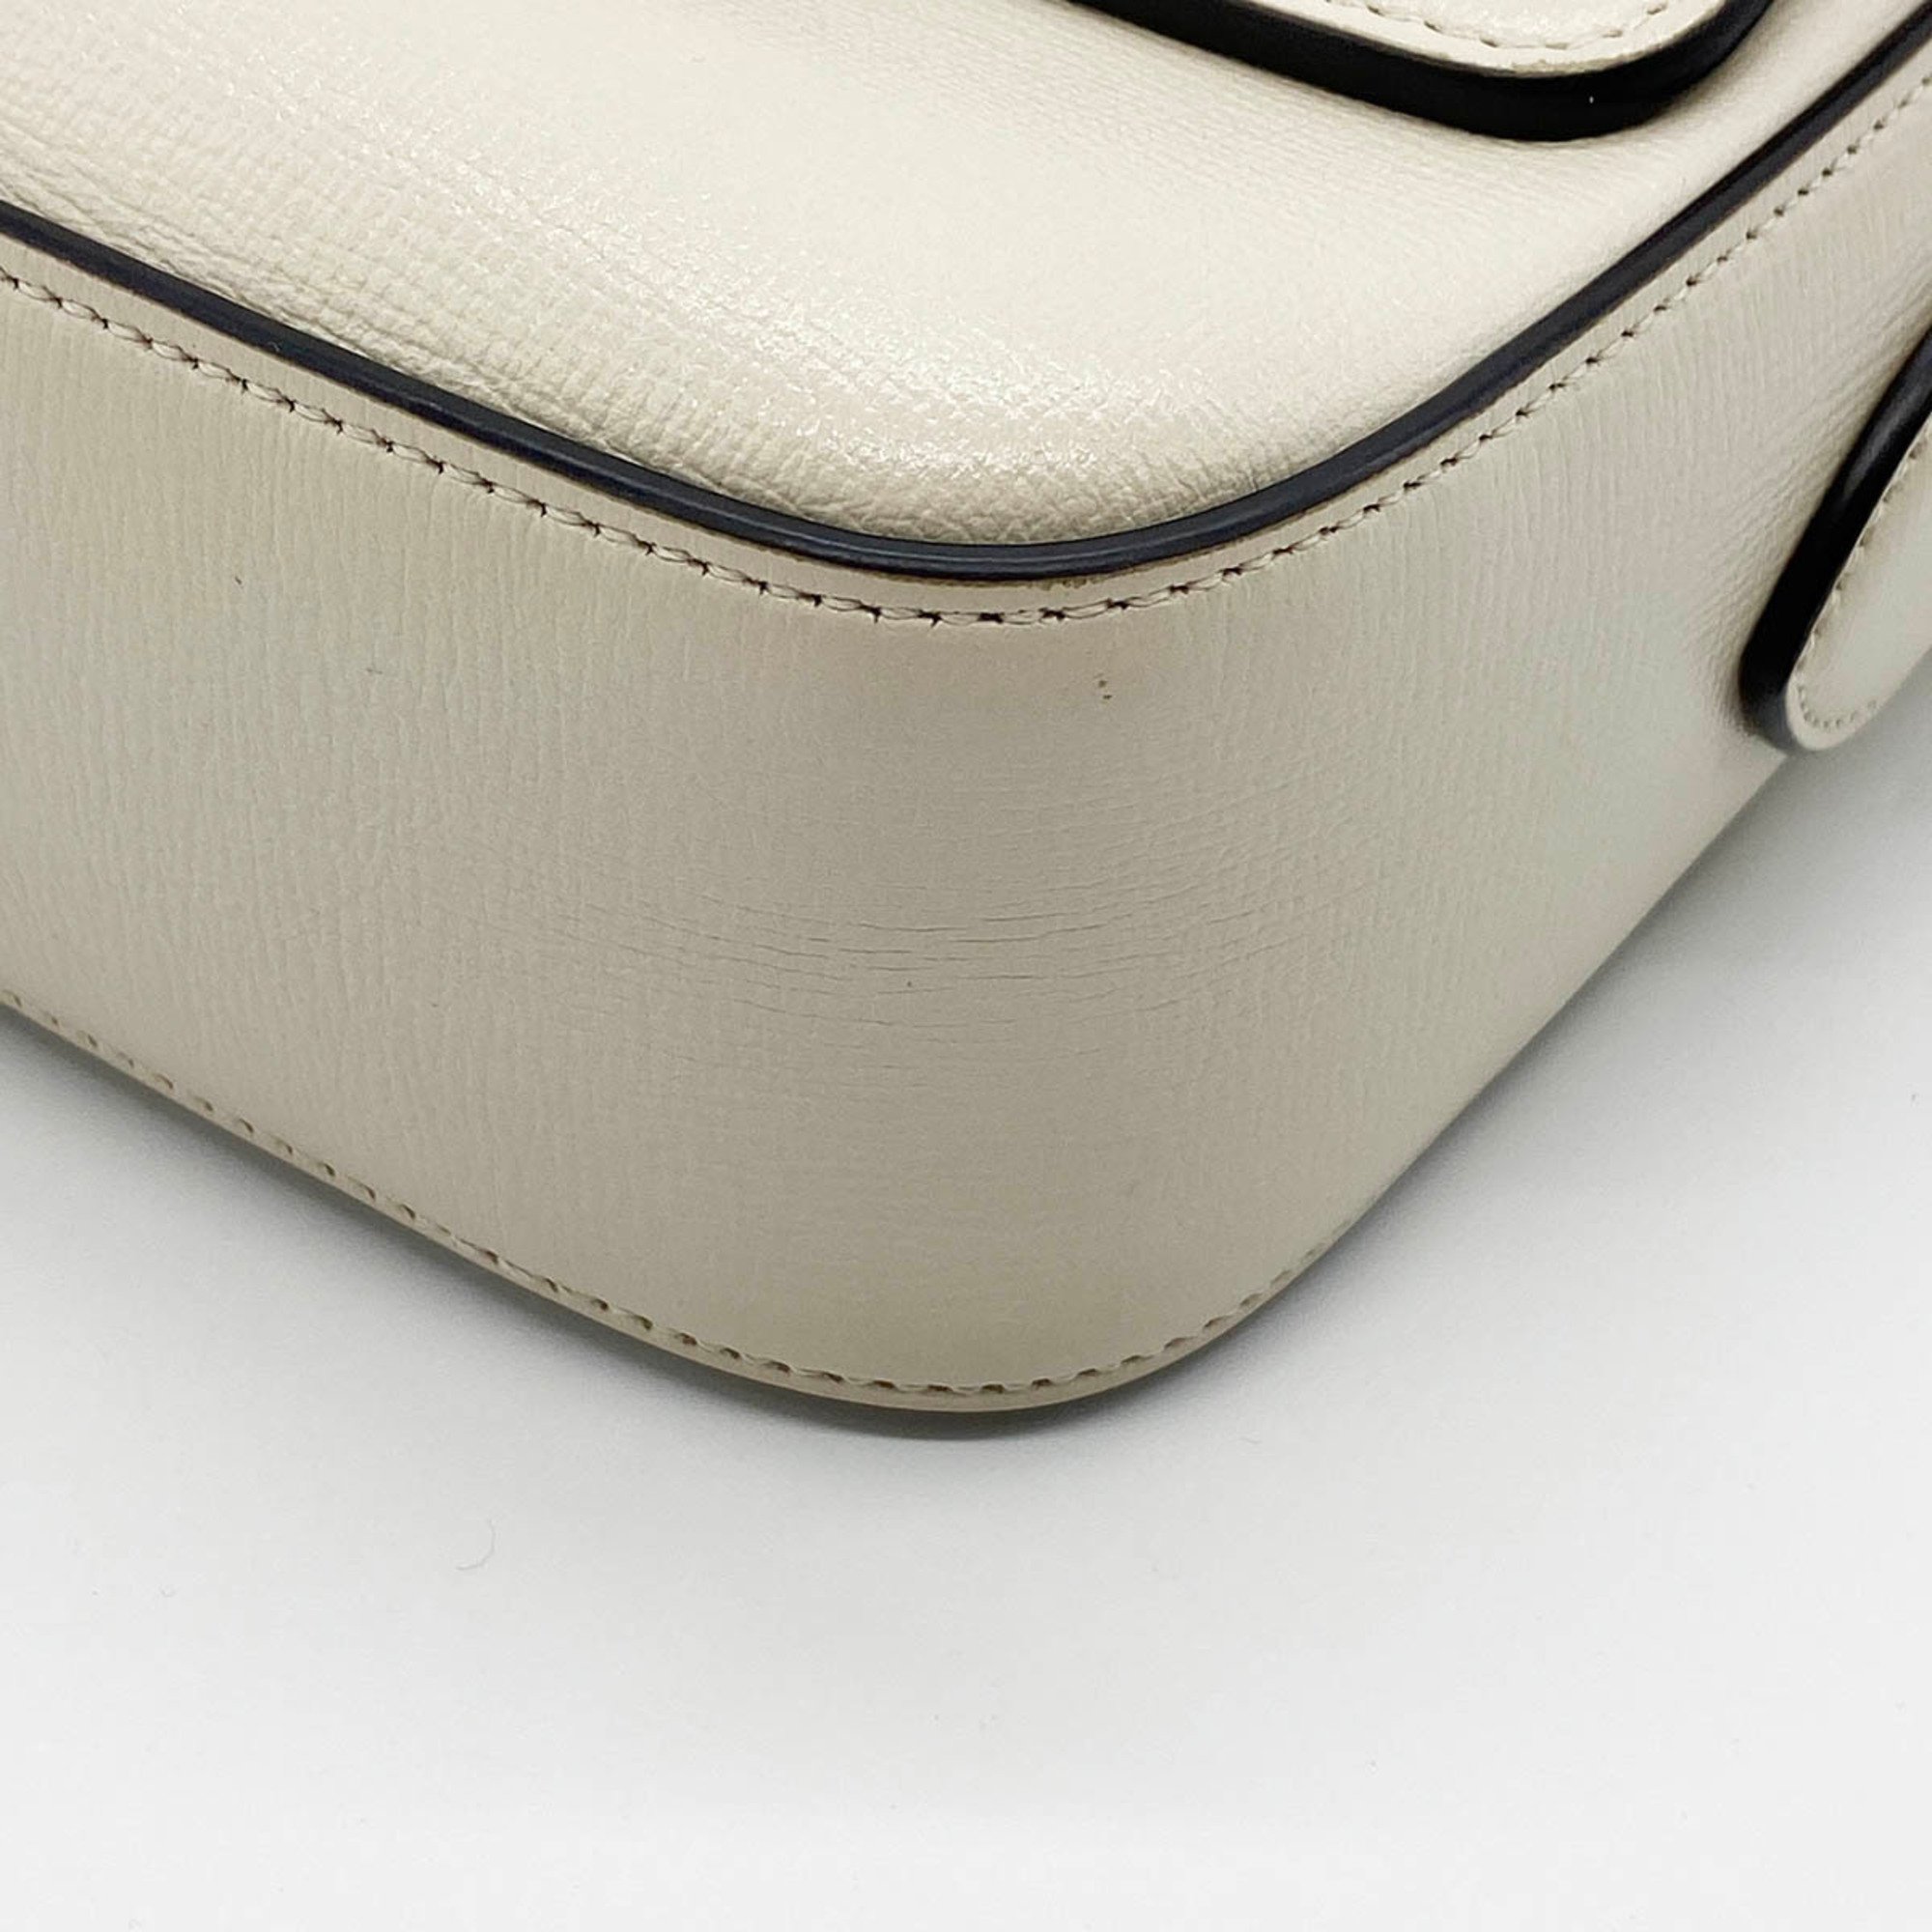 Gucci Horsebit Shoulder Bag White Leather Ladies 645454 GUCCI ITUJ18J7EUG0